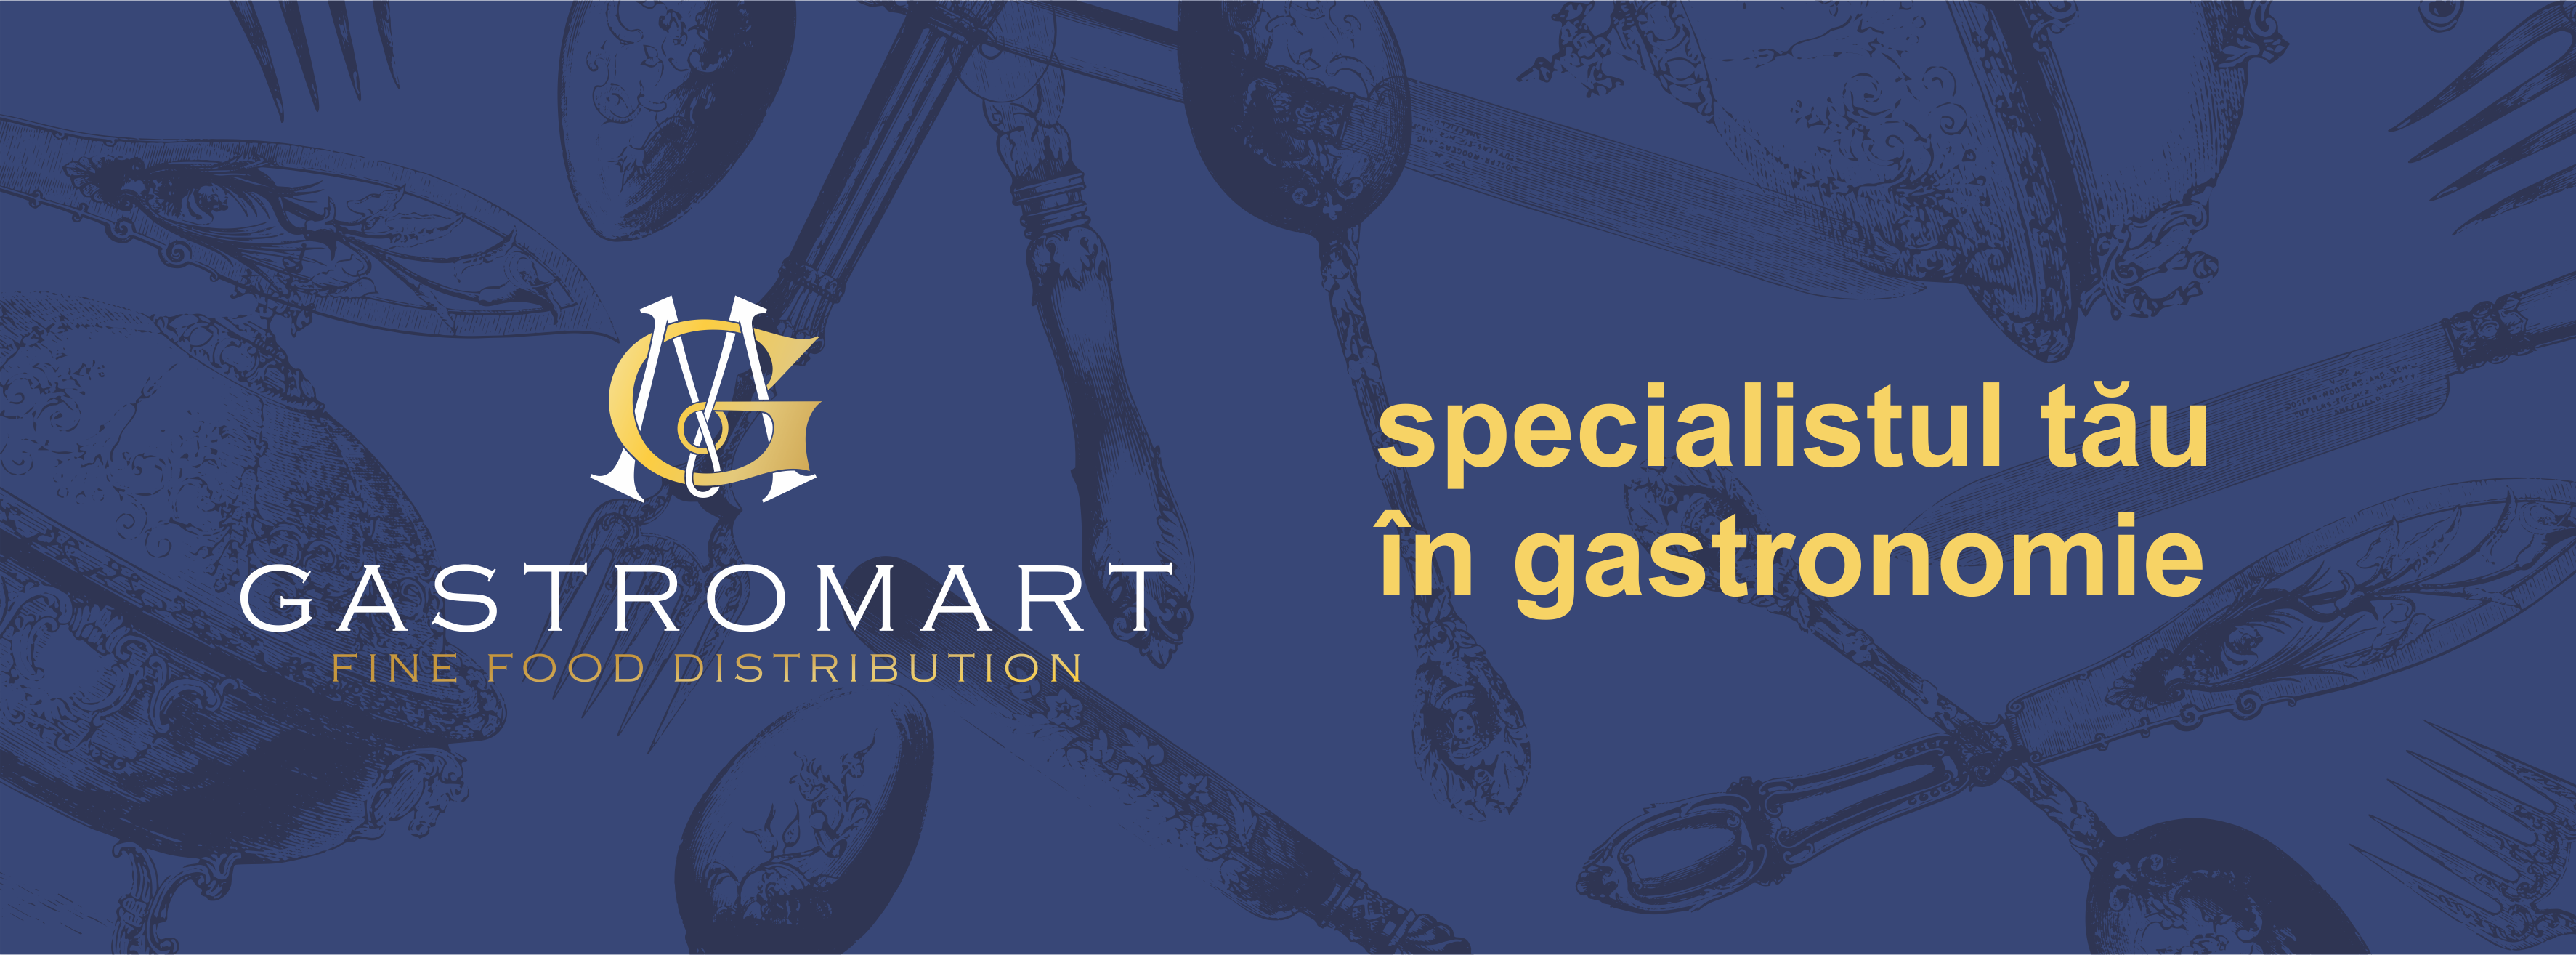 Gastromart - Specialistul tau in gastronomie